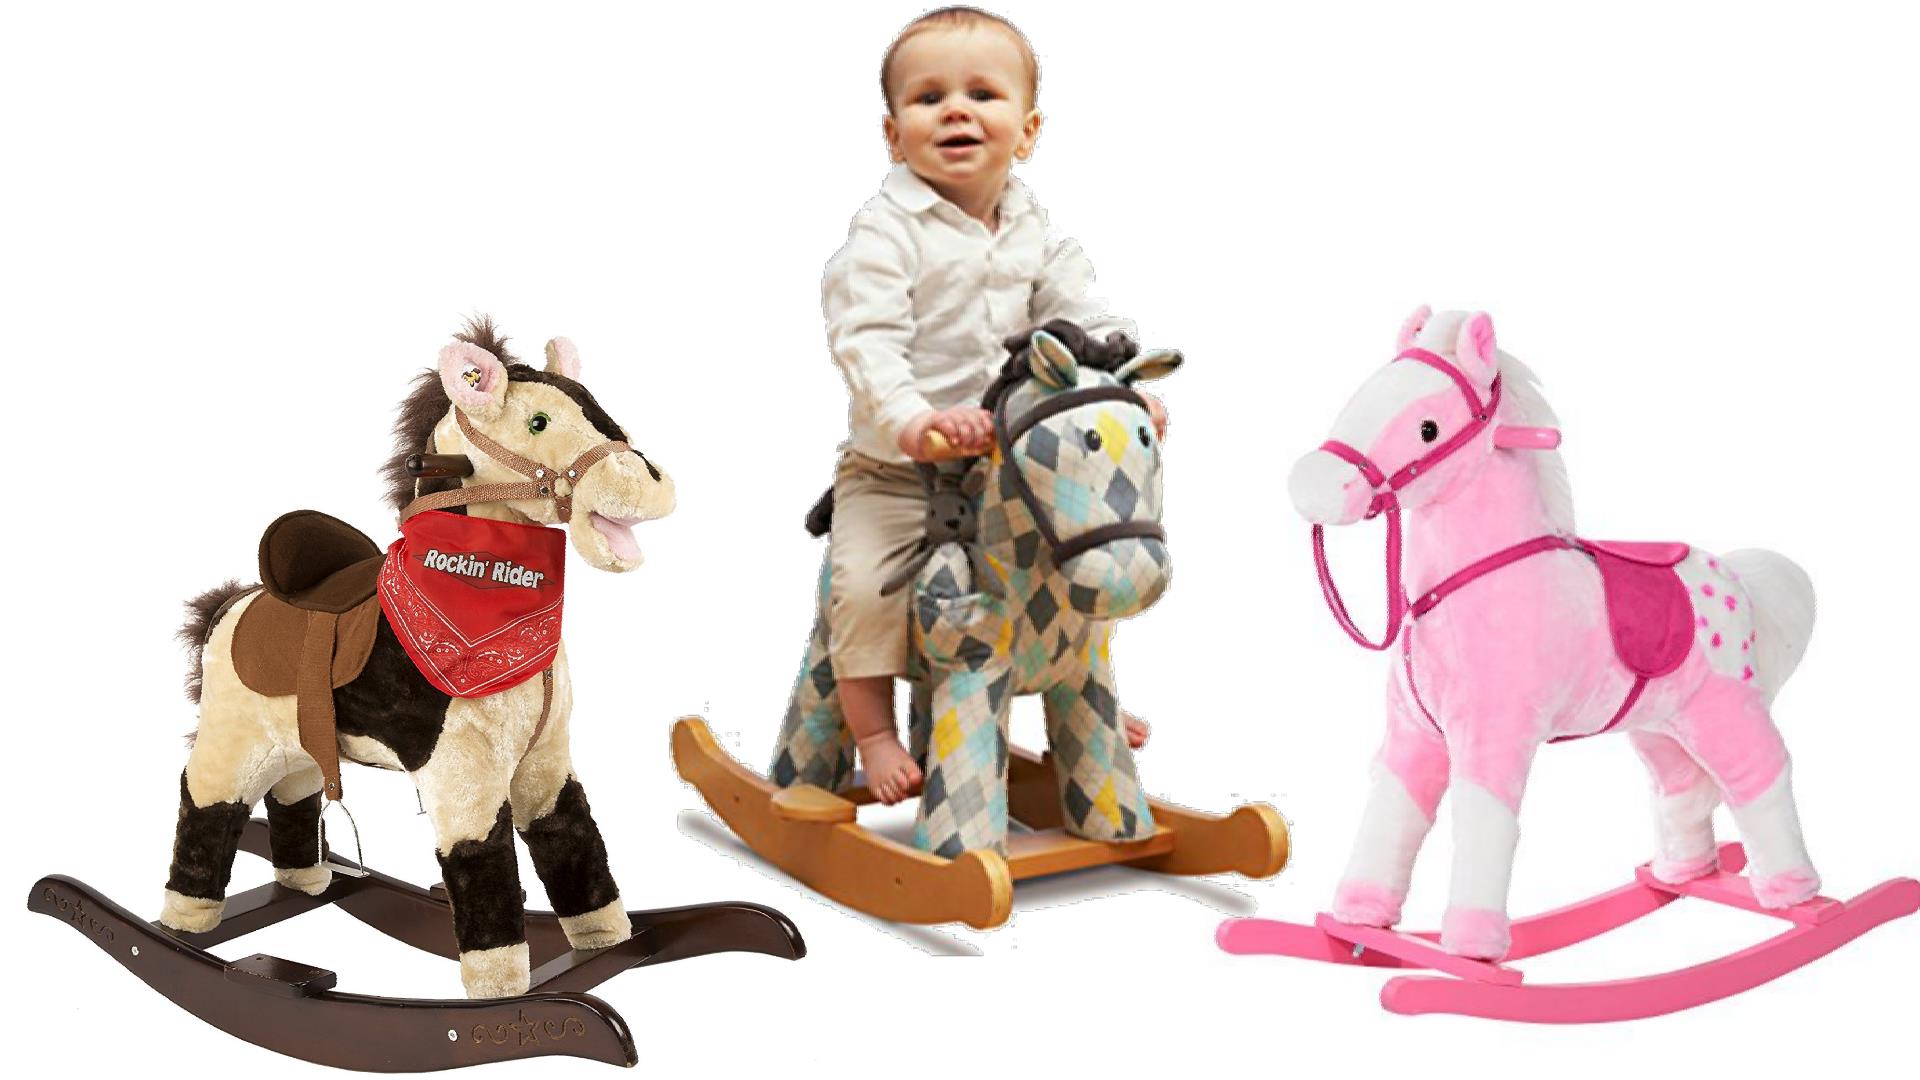 Toddler rocking horse toys ride on 